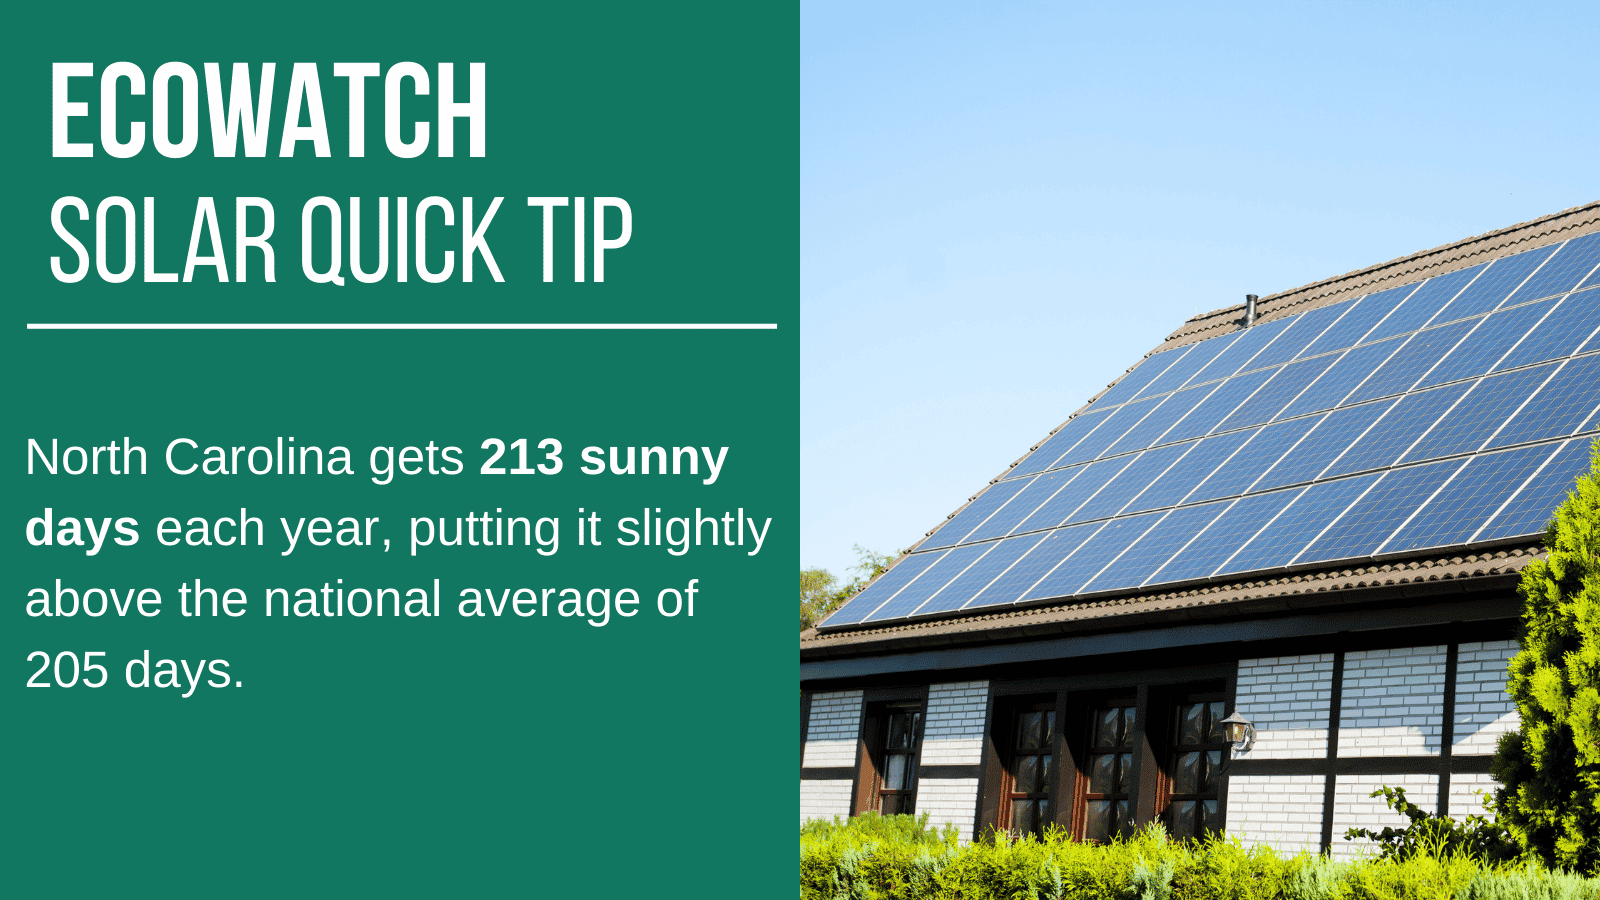 Solar Quick Tip - North Carolina gets 213 sunny days each year